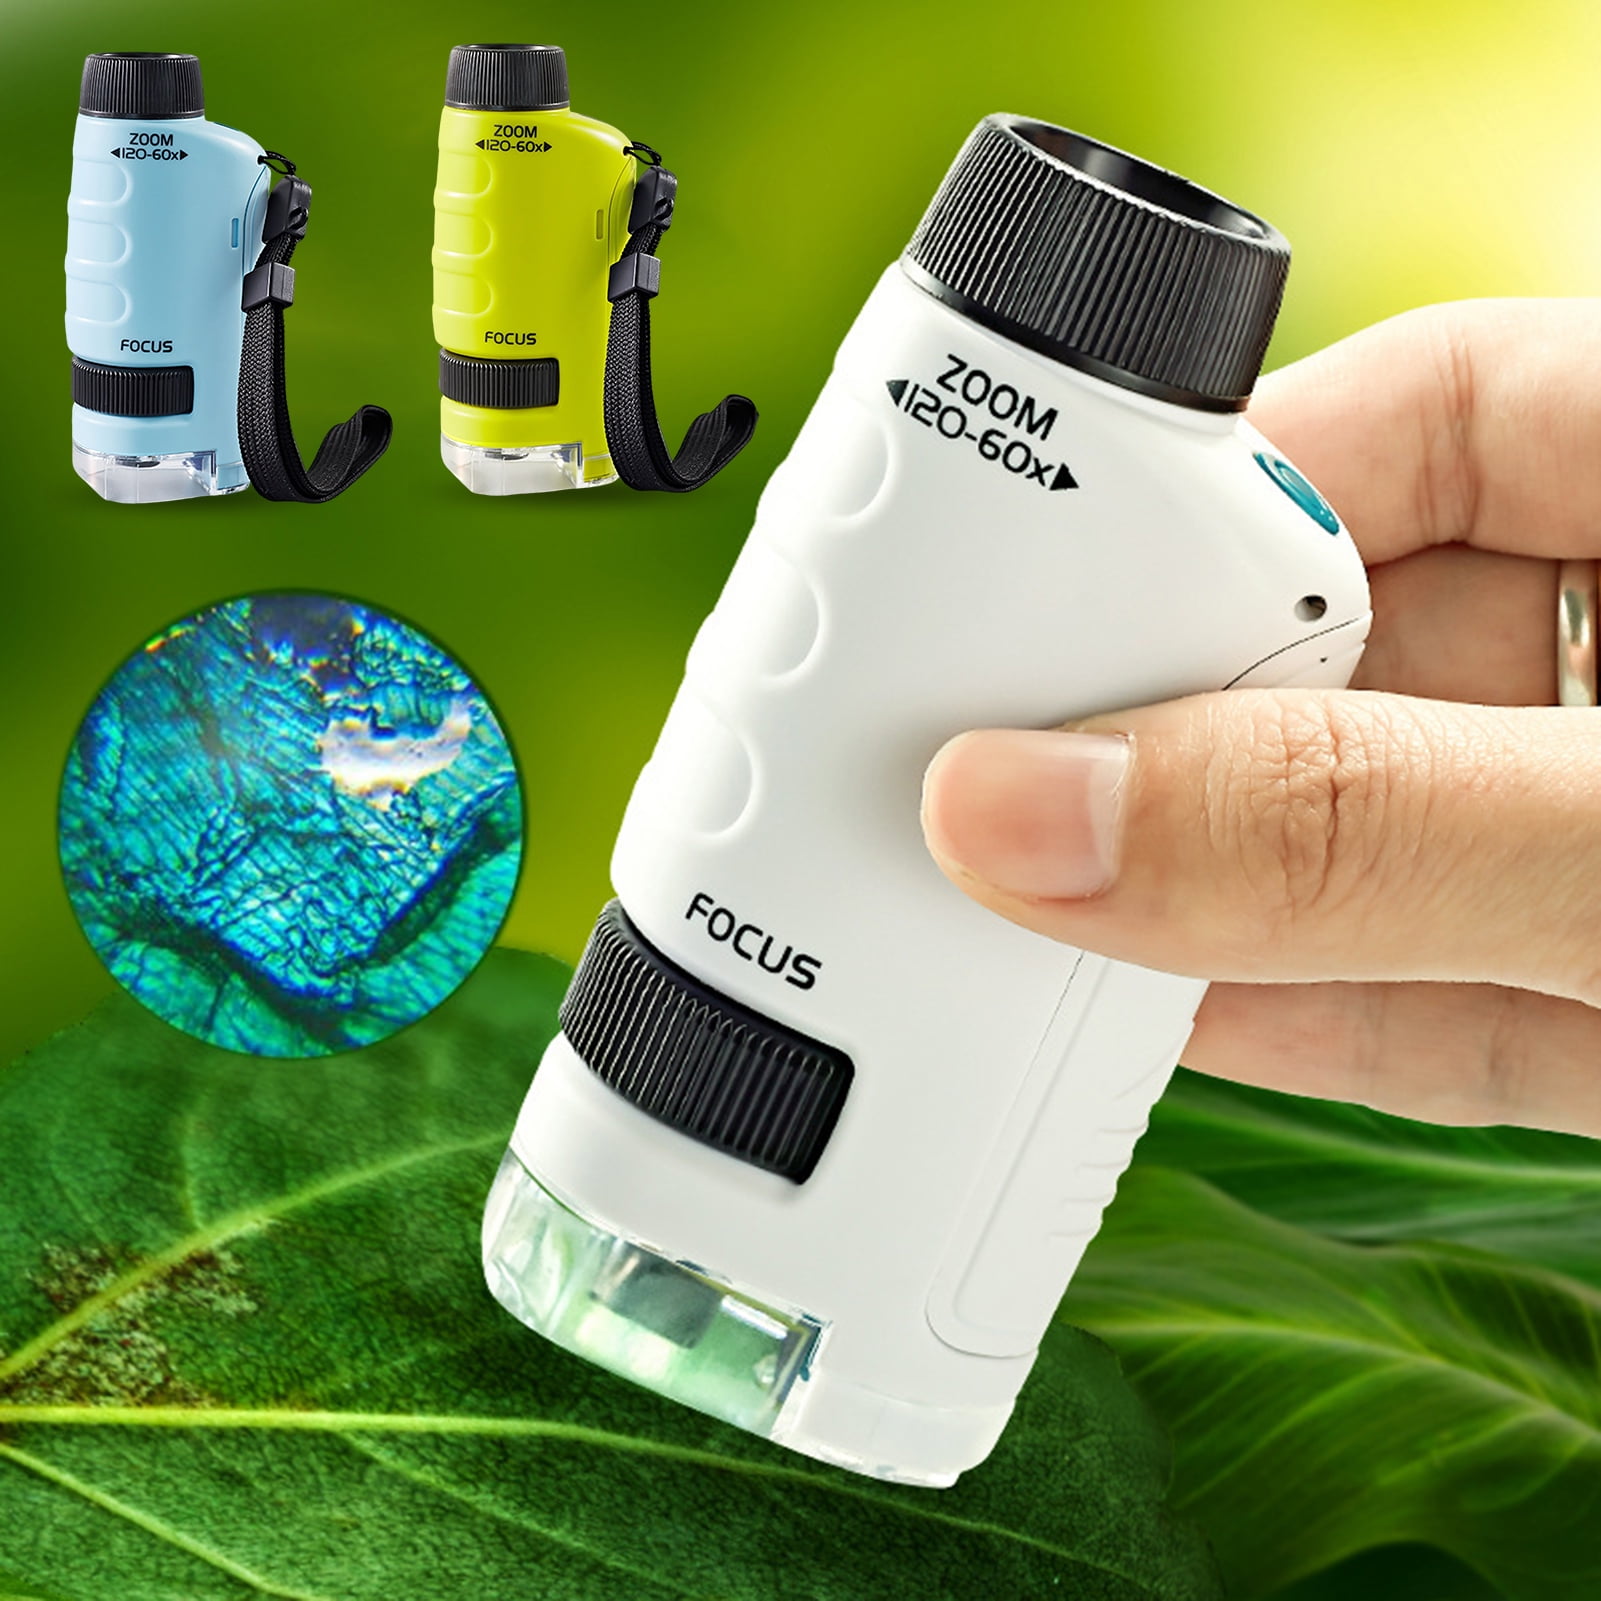 Pocket Mini Microscope Loupe Handheld Led With Light Zoom Adjustable Focal